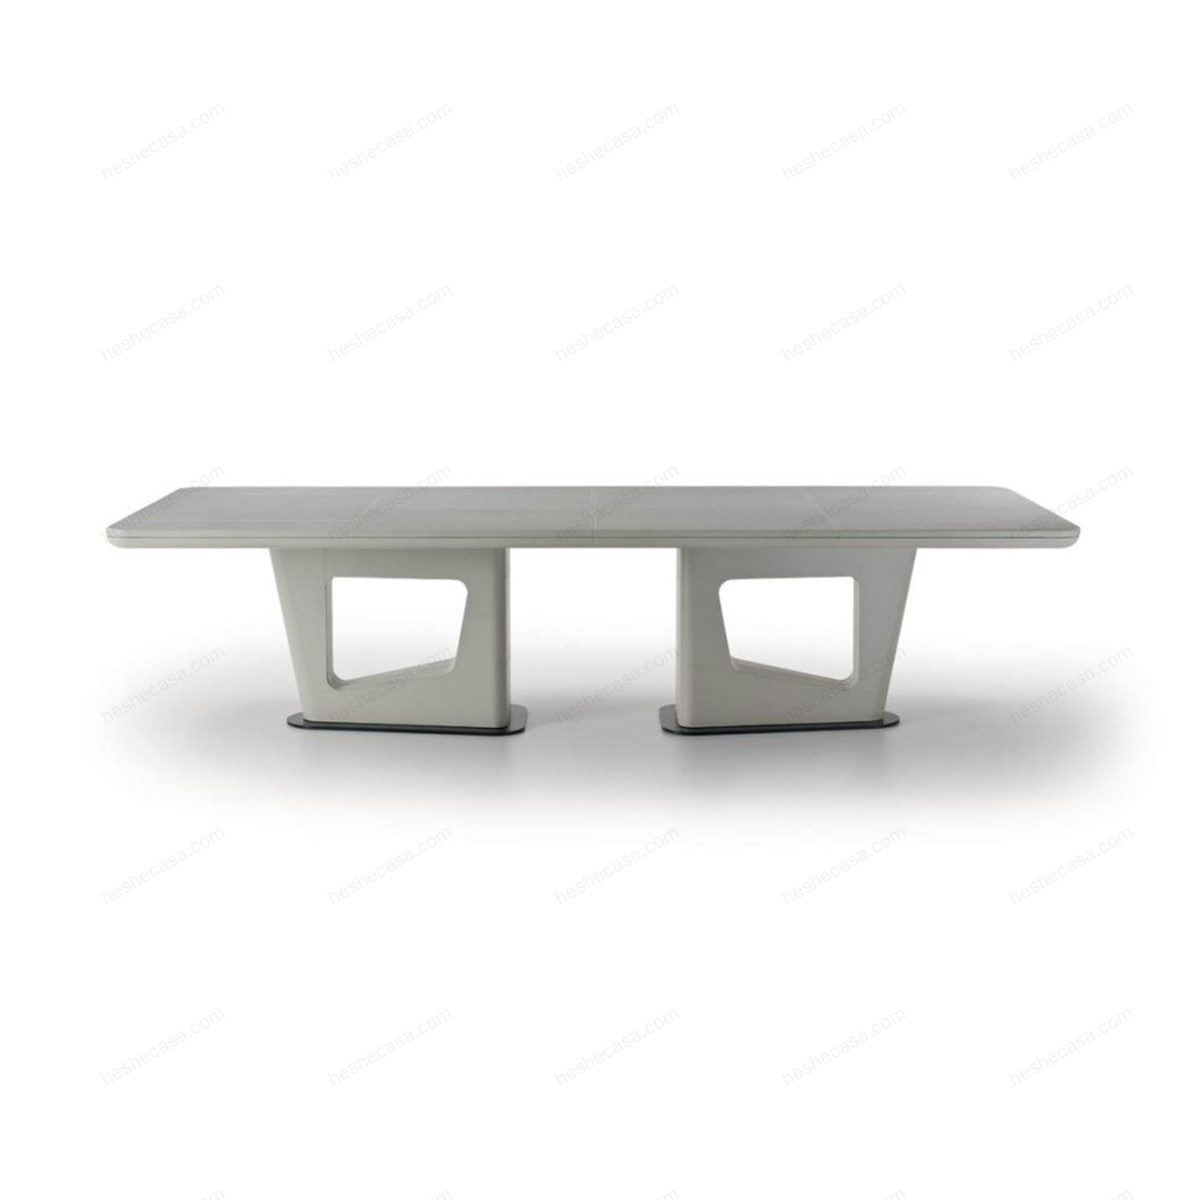 Avatar table会议桌